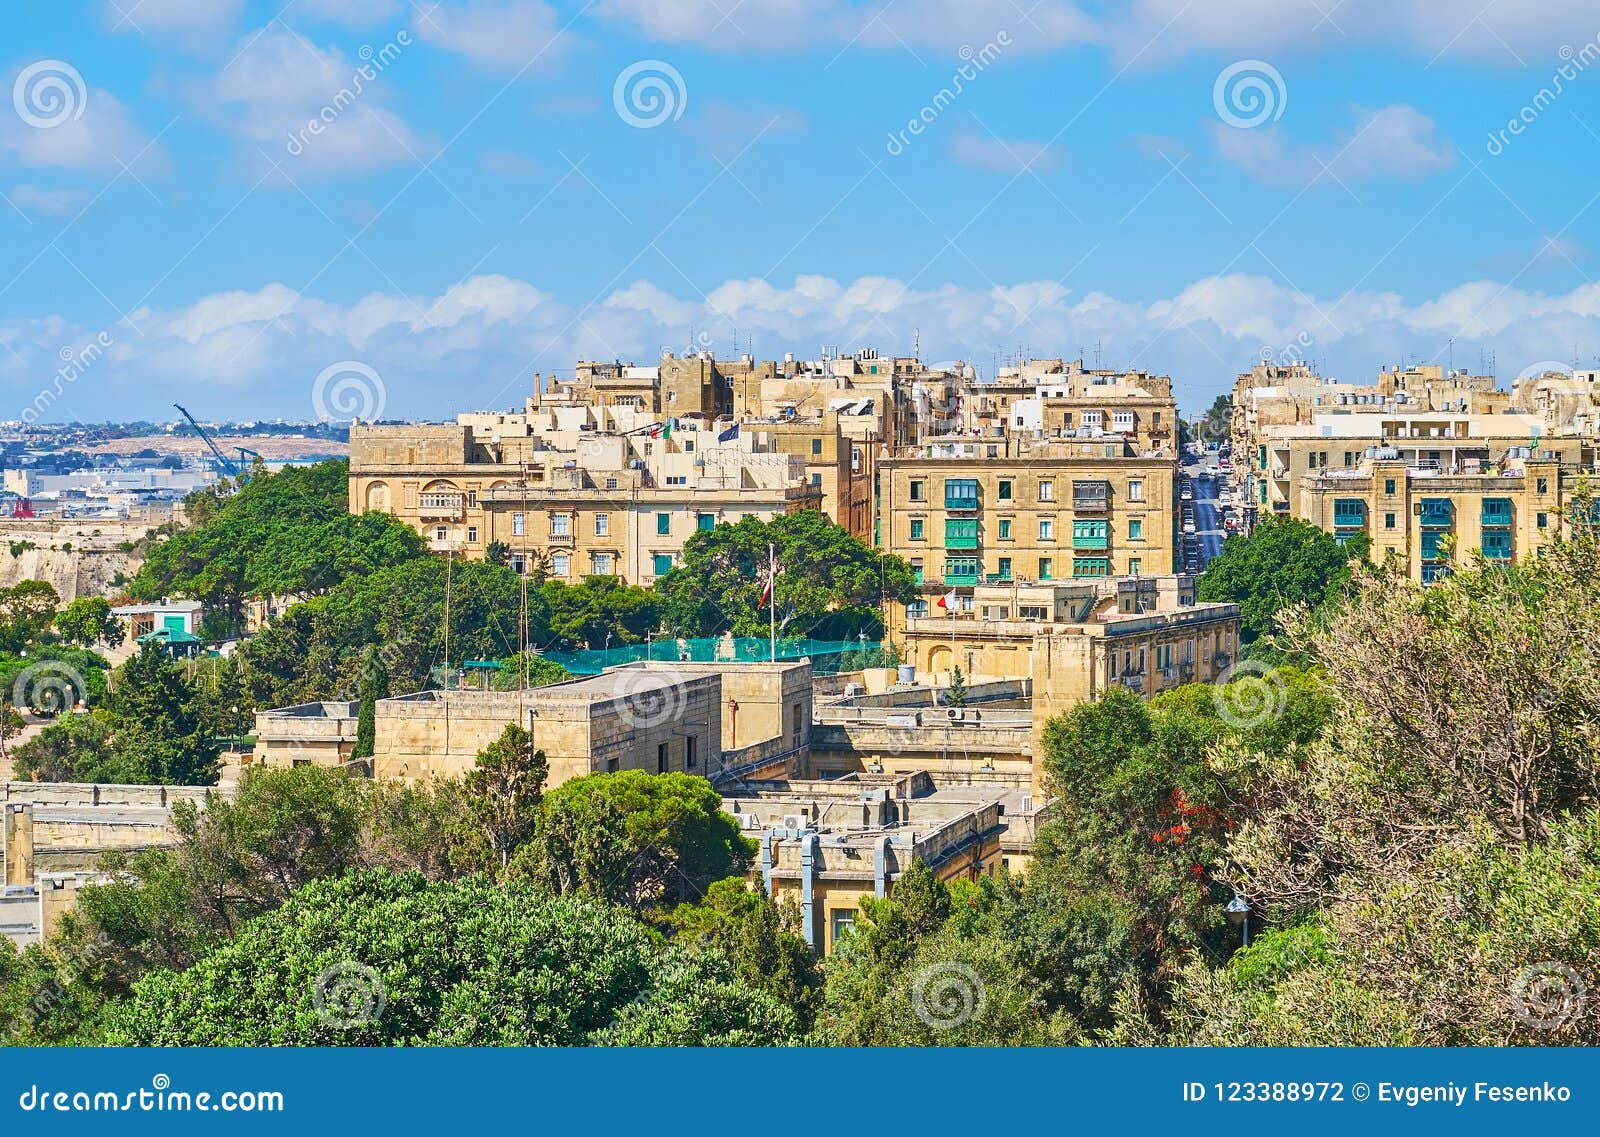 the housing of floriana, malta